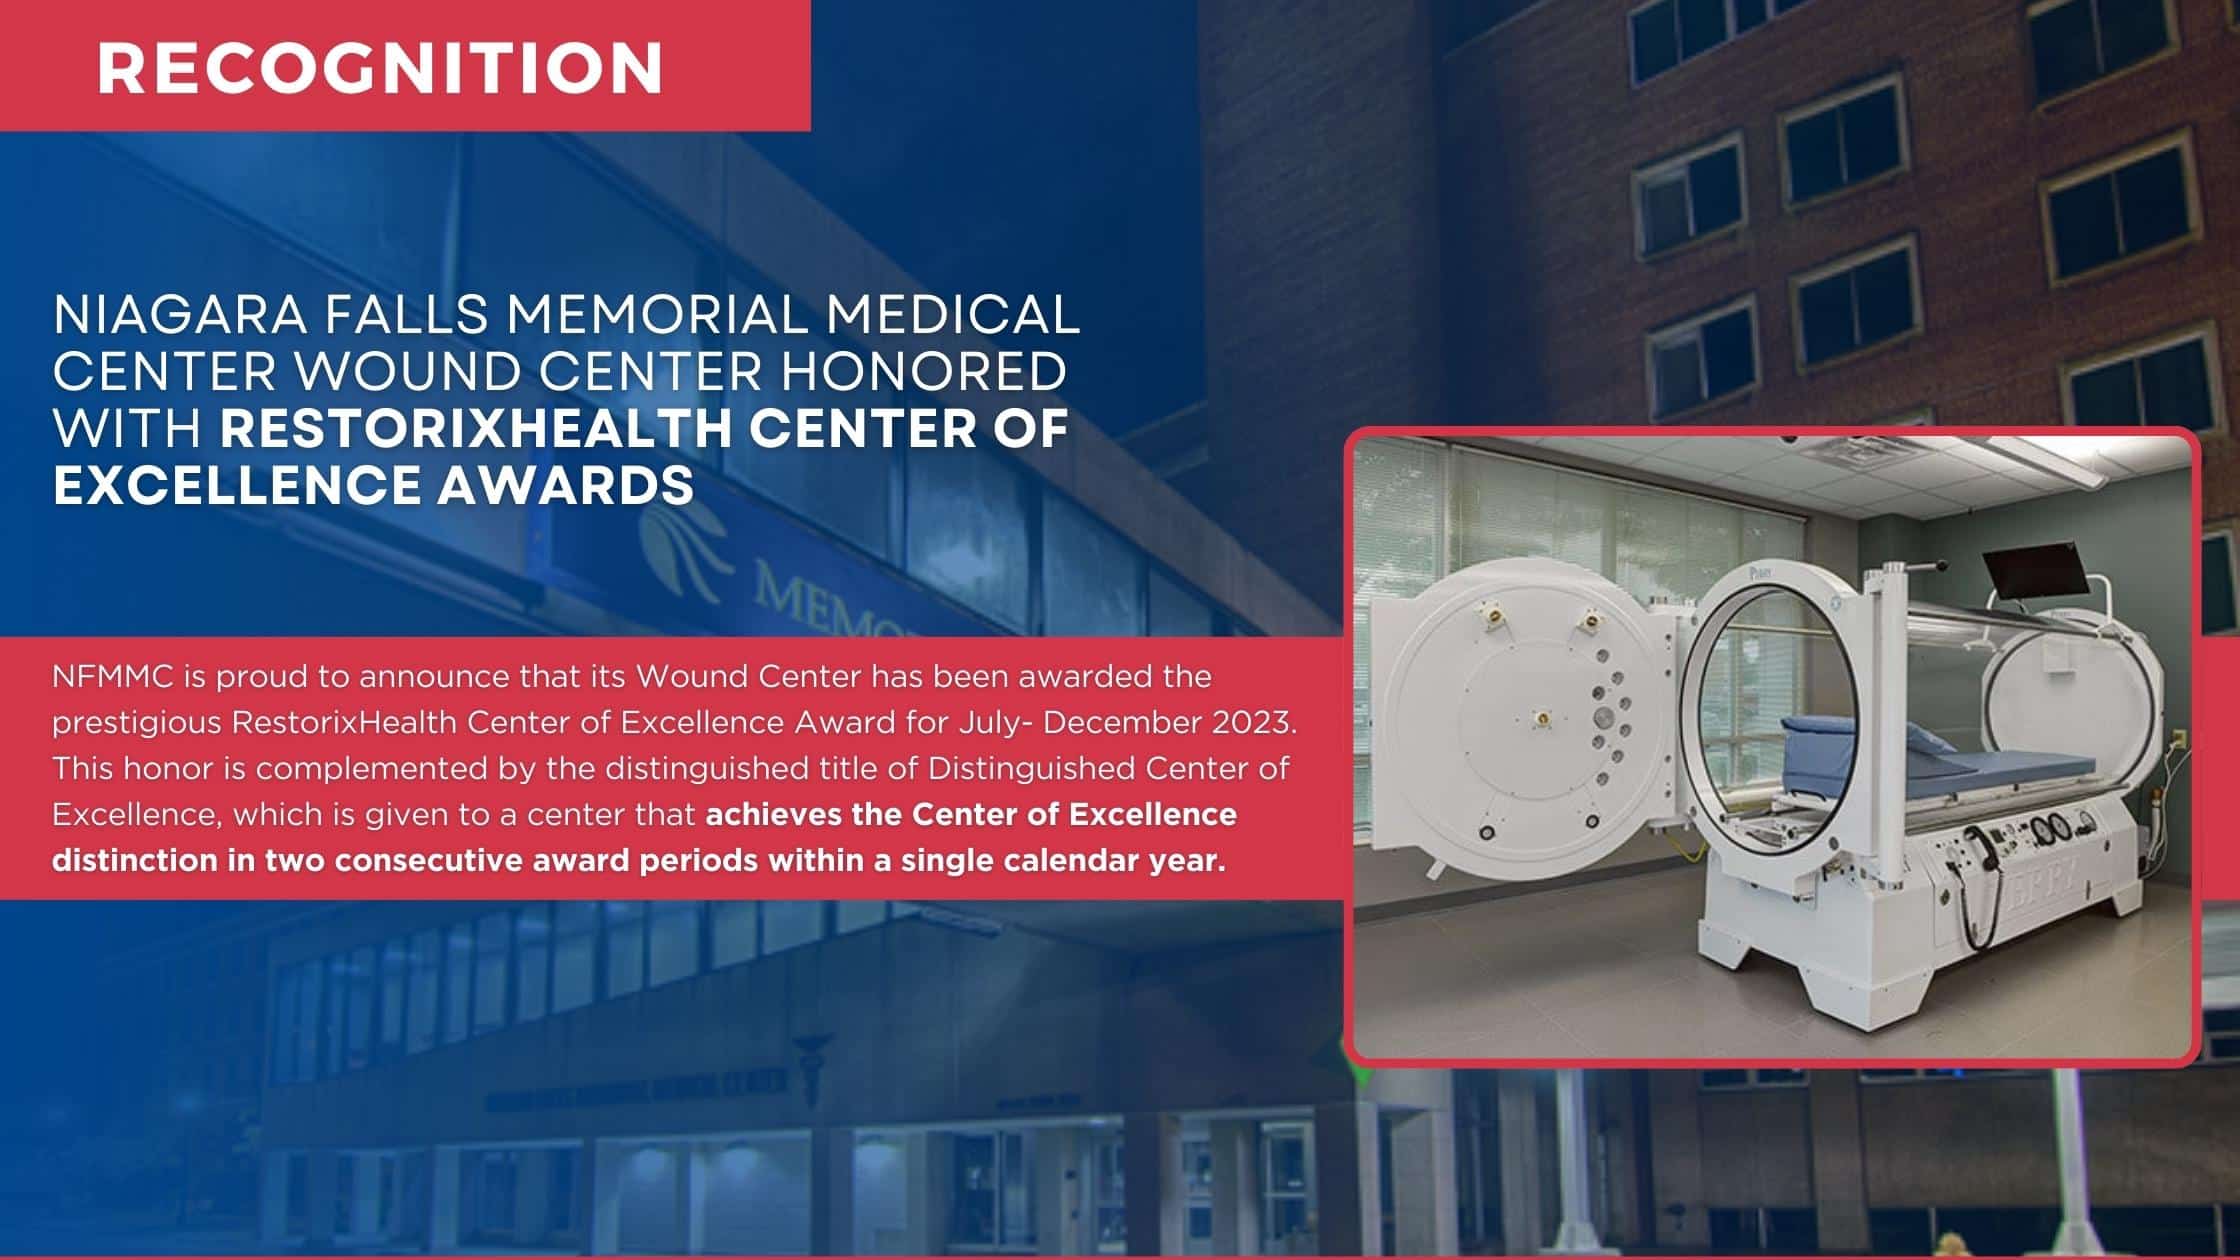 Niagara Falls Memorial Medical Center Wound Center Honored with RestorixHealth Center of Excellence Awards